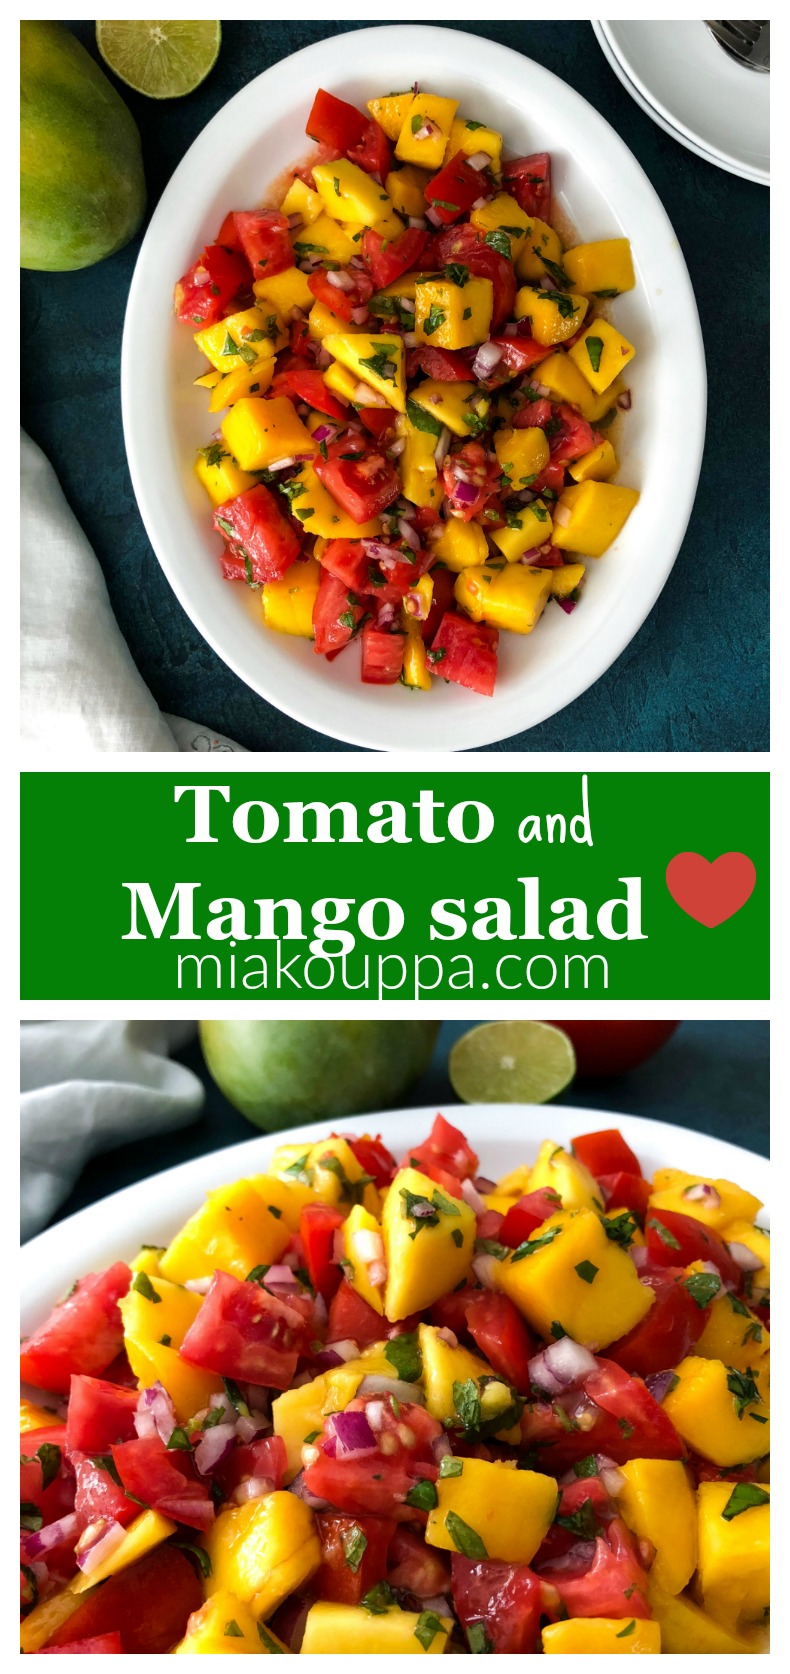 Tomato and Mango salad